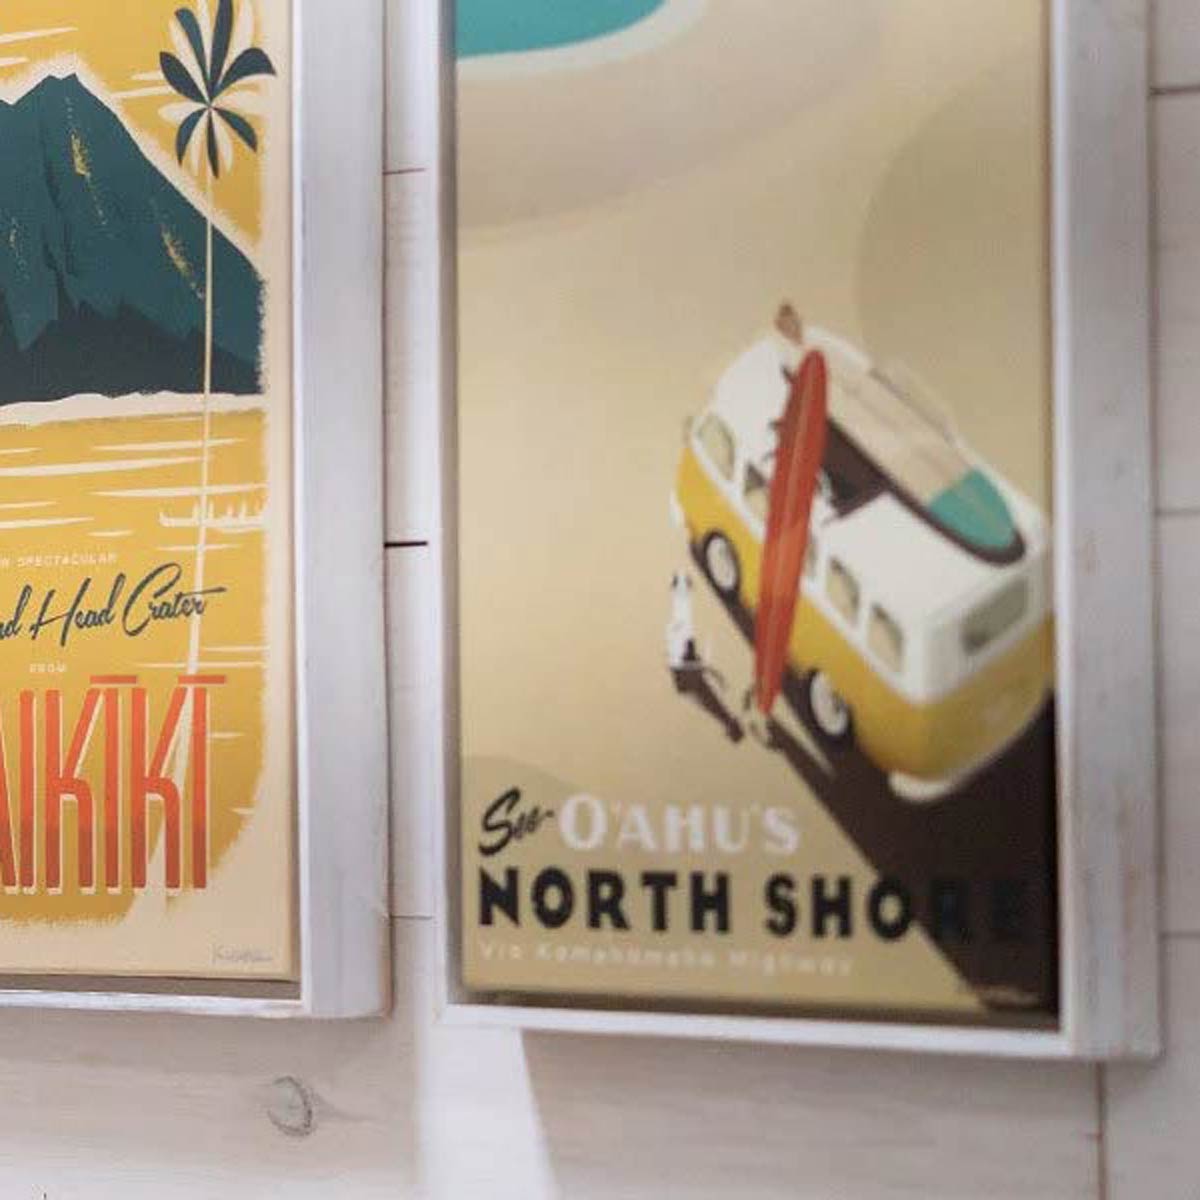 Nick Kuchar | Hawaii Surf Art & Vintage Inspired Hawaii Travel Prints